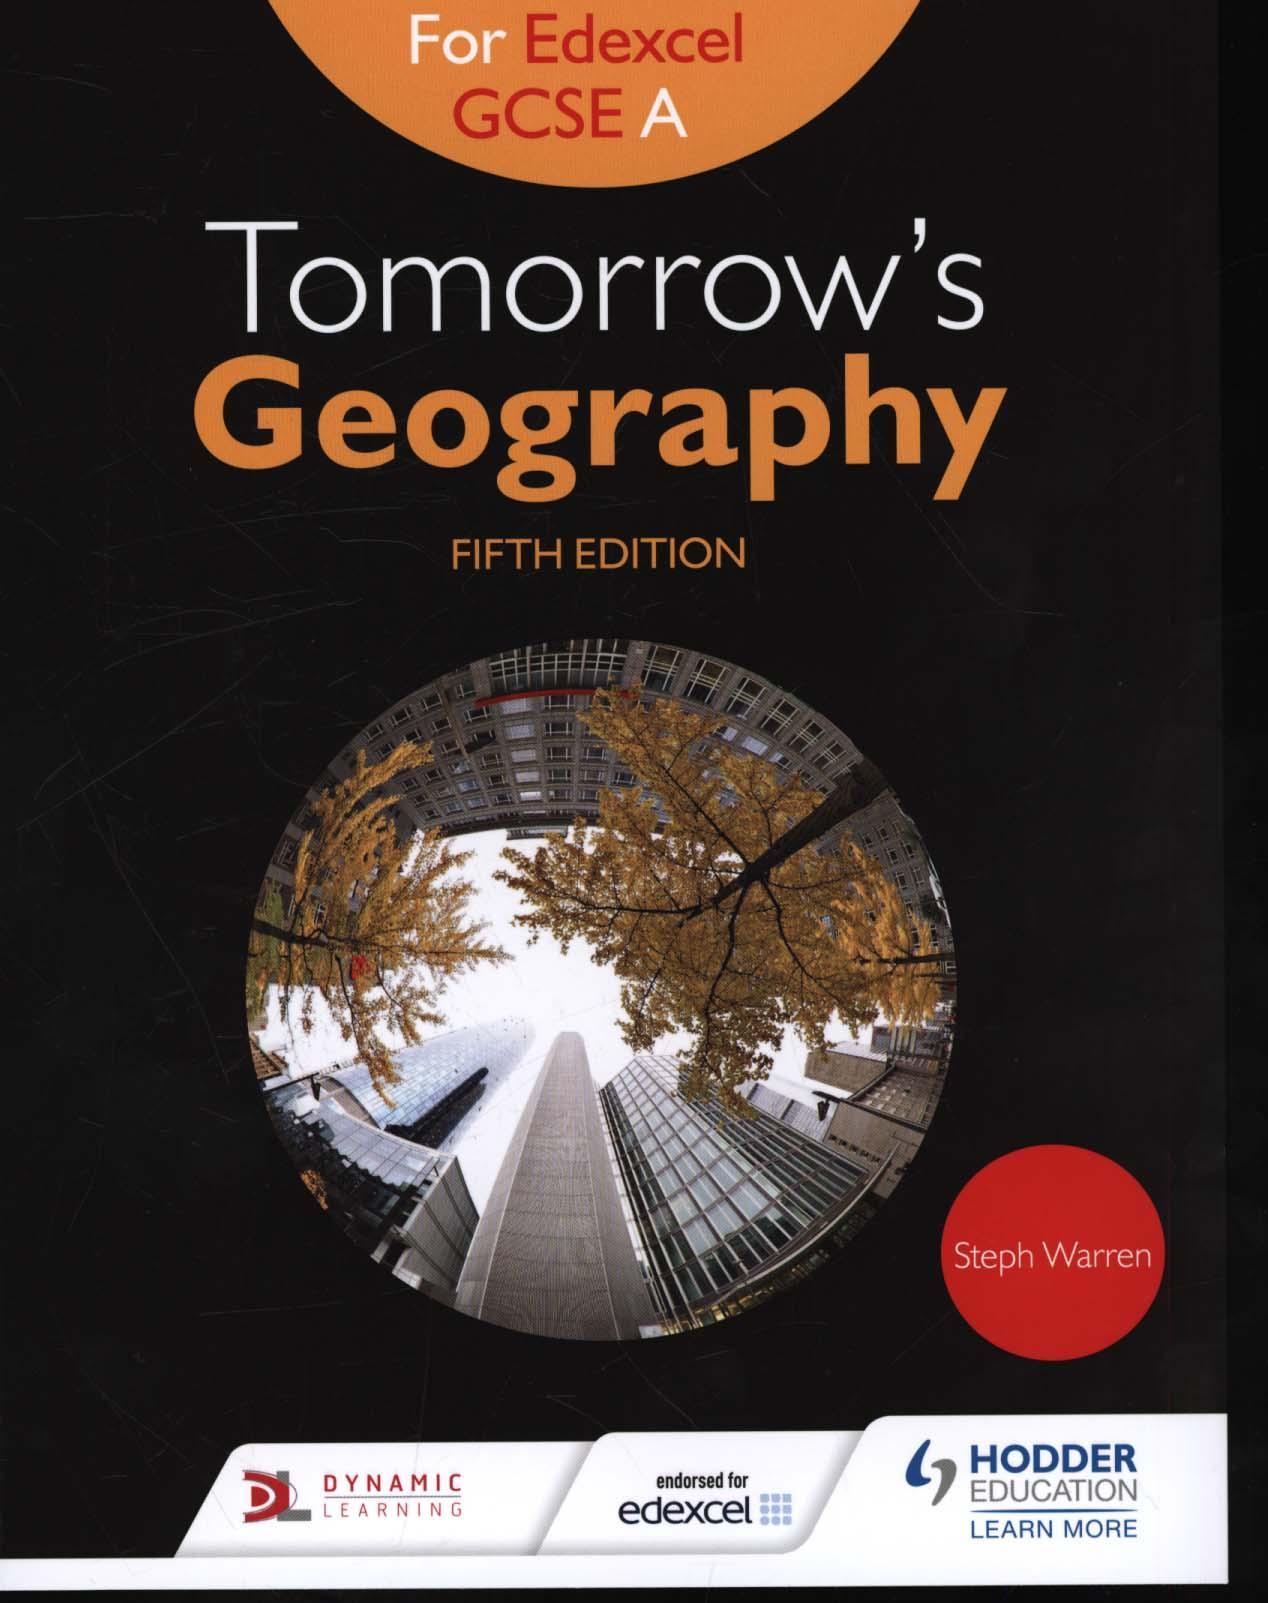 Tomorrow's Geography for Edexcel GCSE